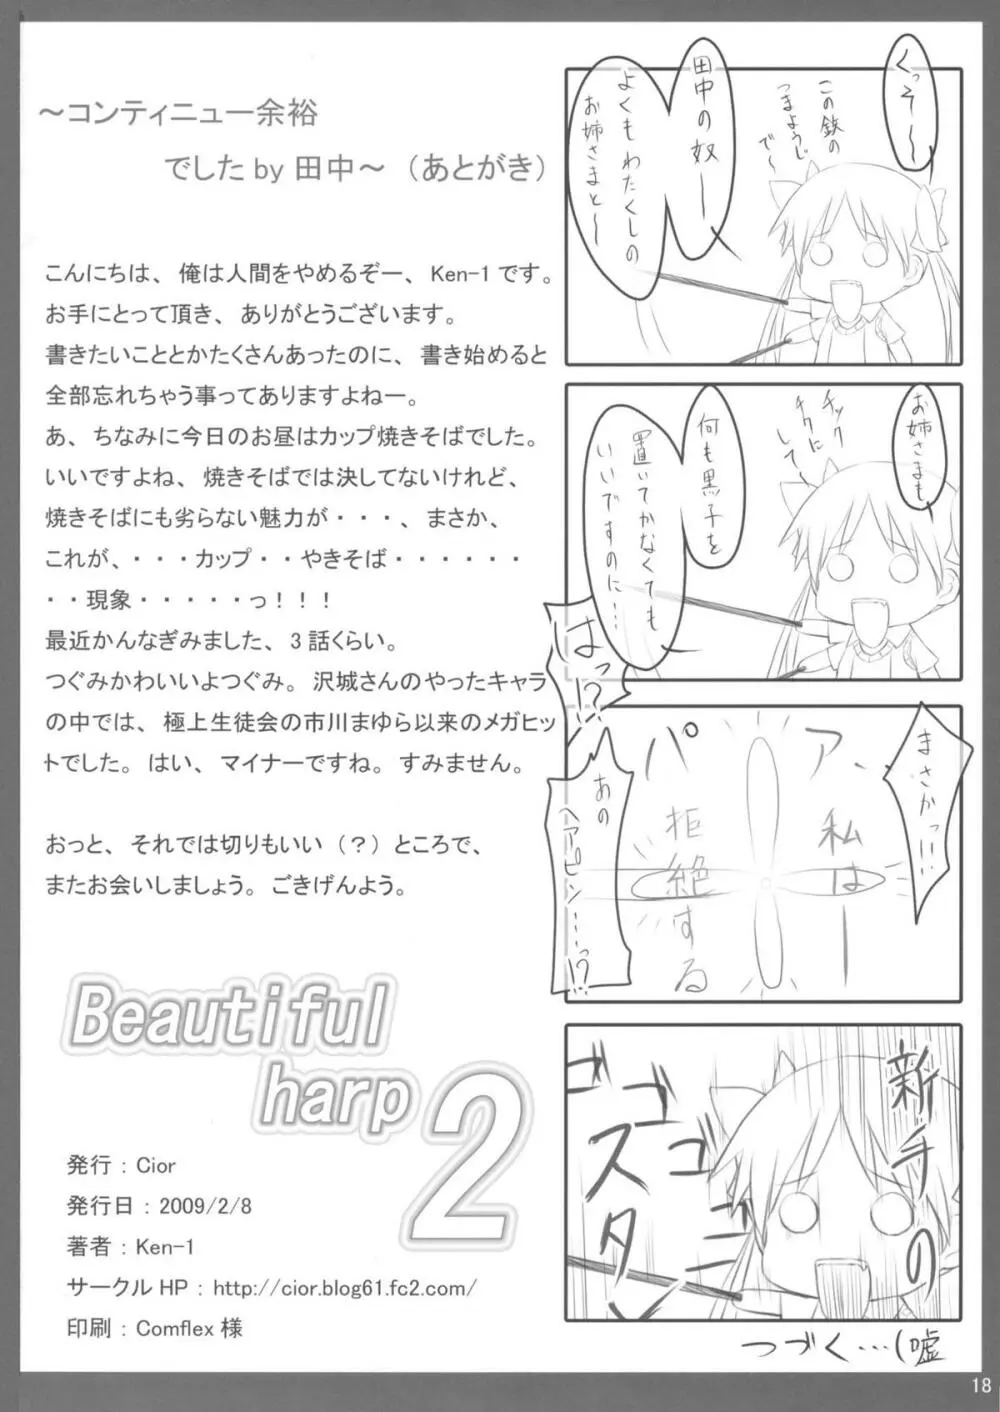 Beautiful harp 2 17ページ